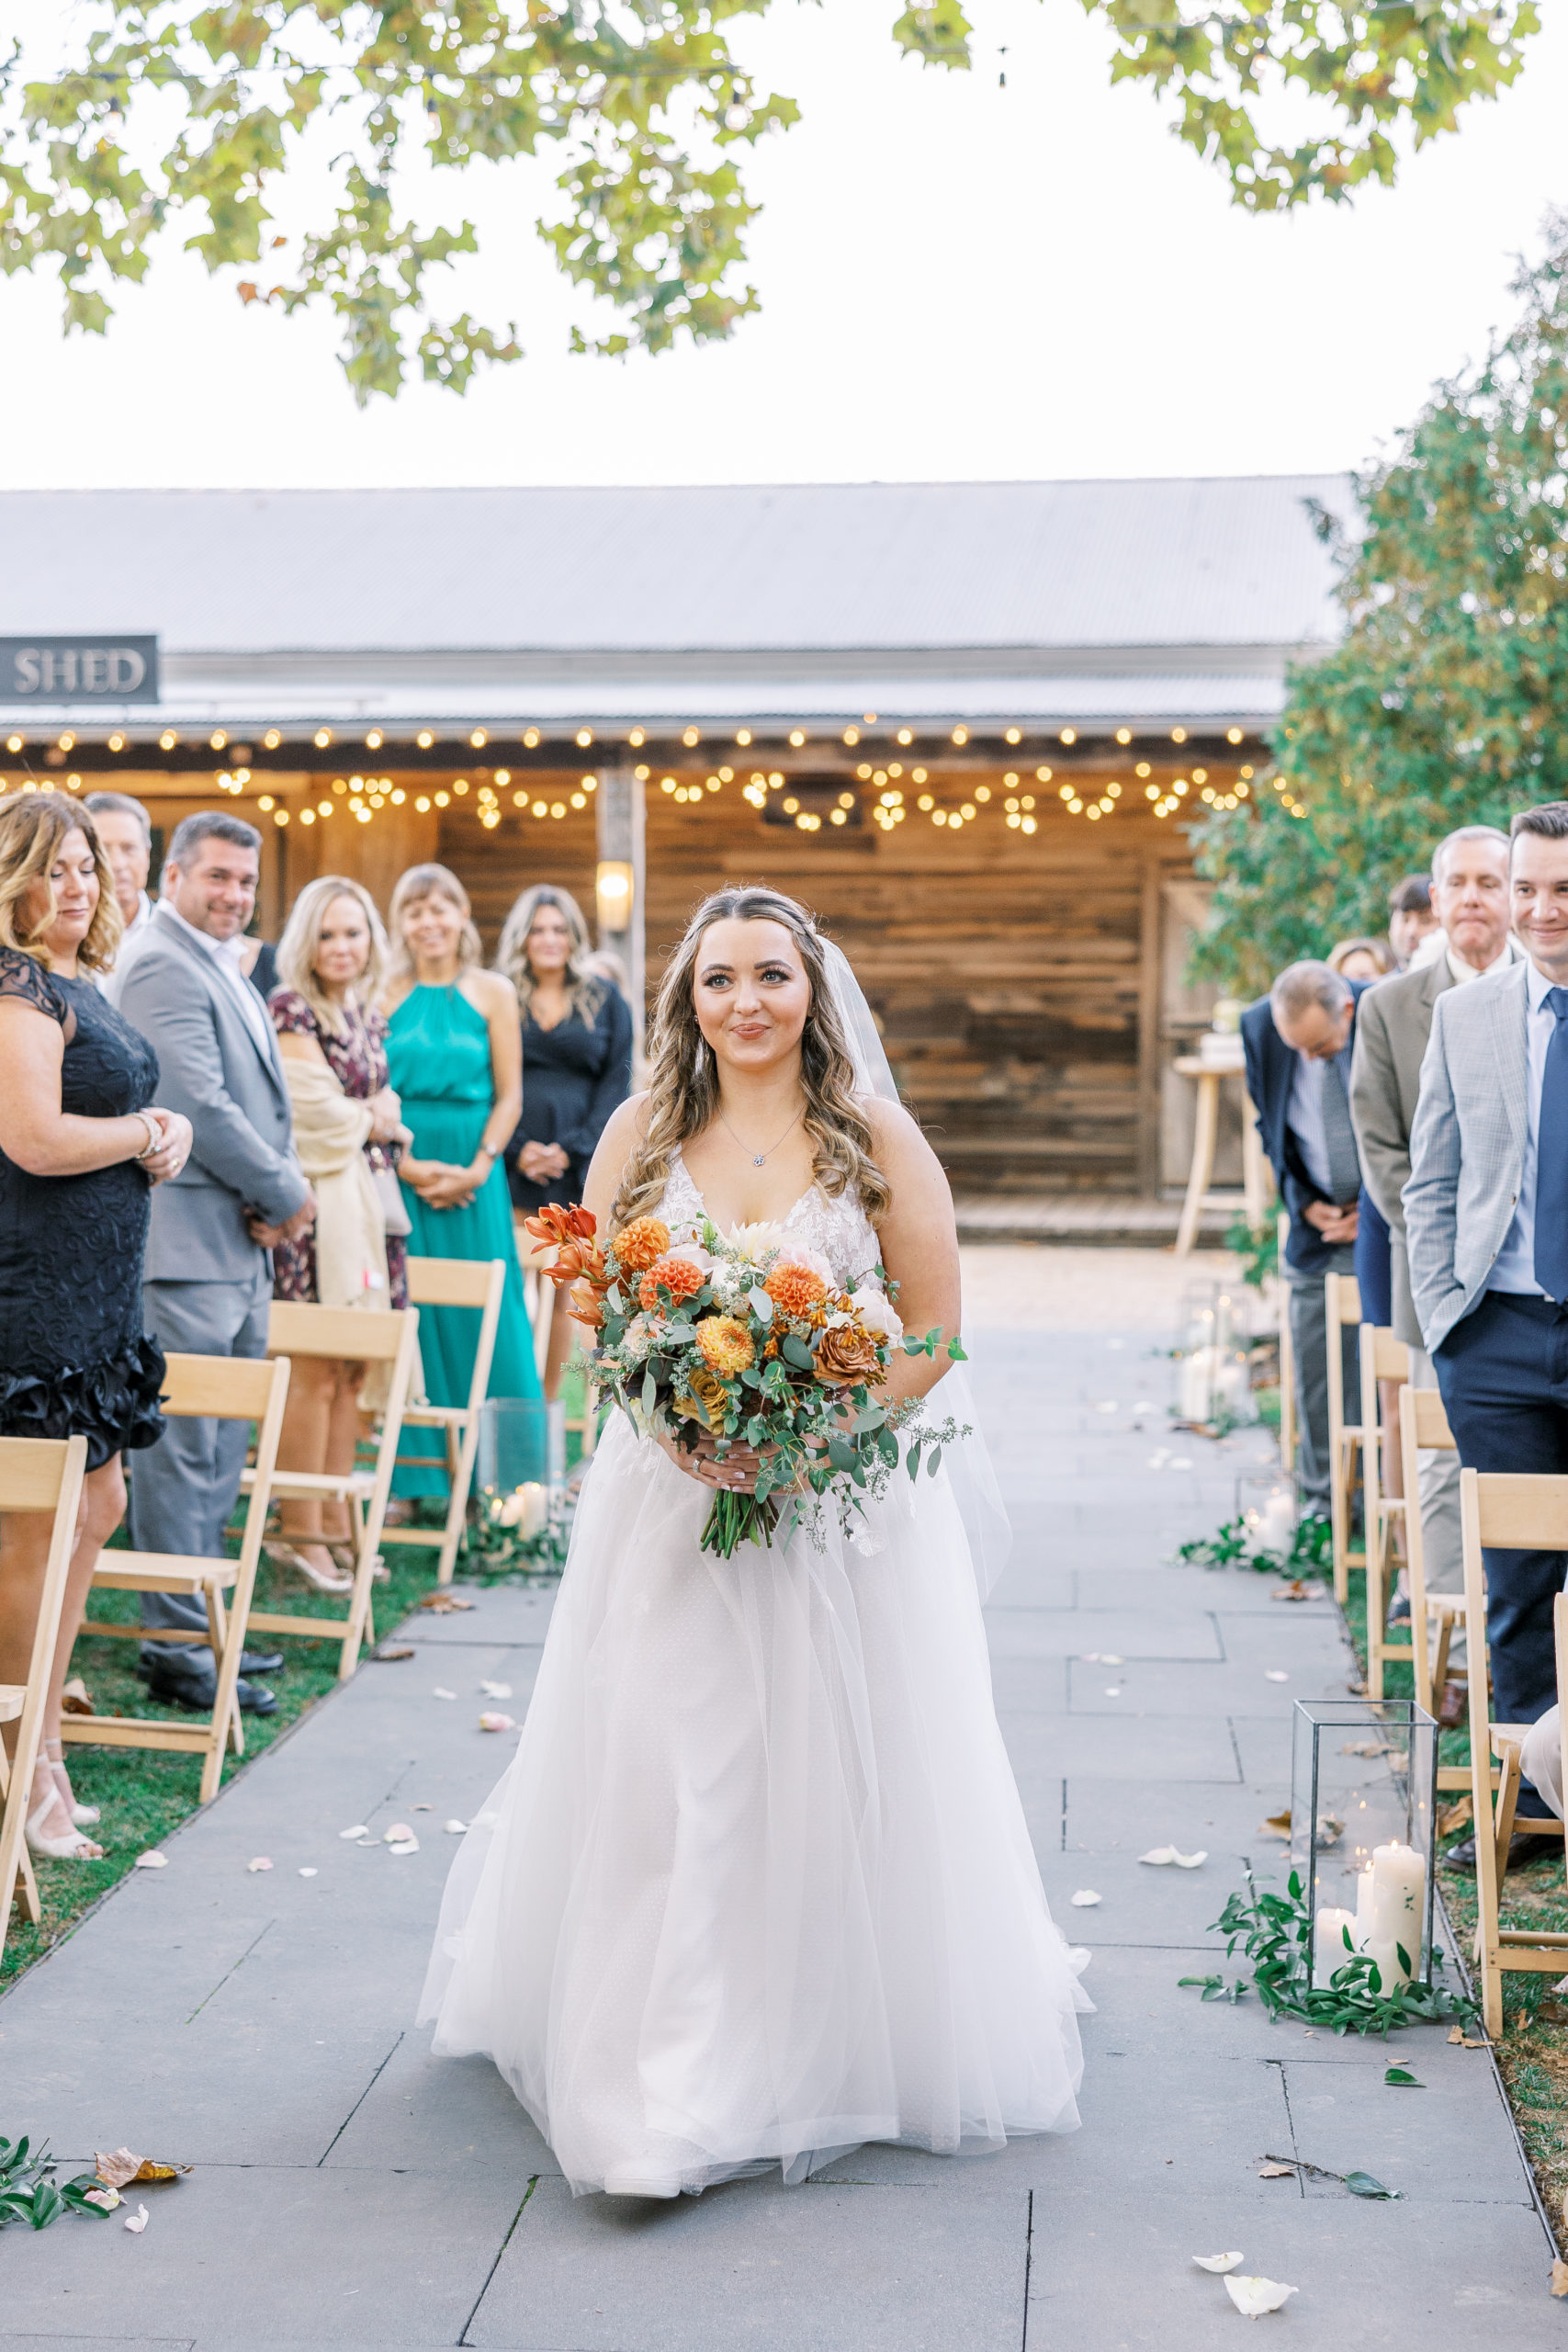 Bride walks down stone path aisle holding wedding bouquet for Terrain at Styer's Wedding